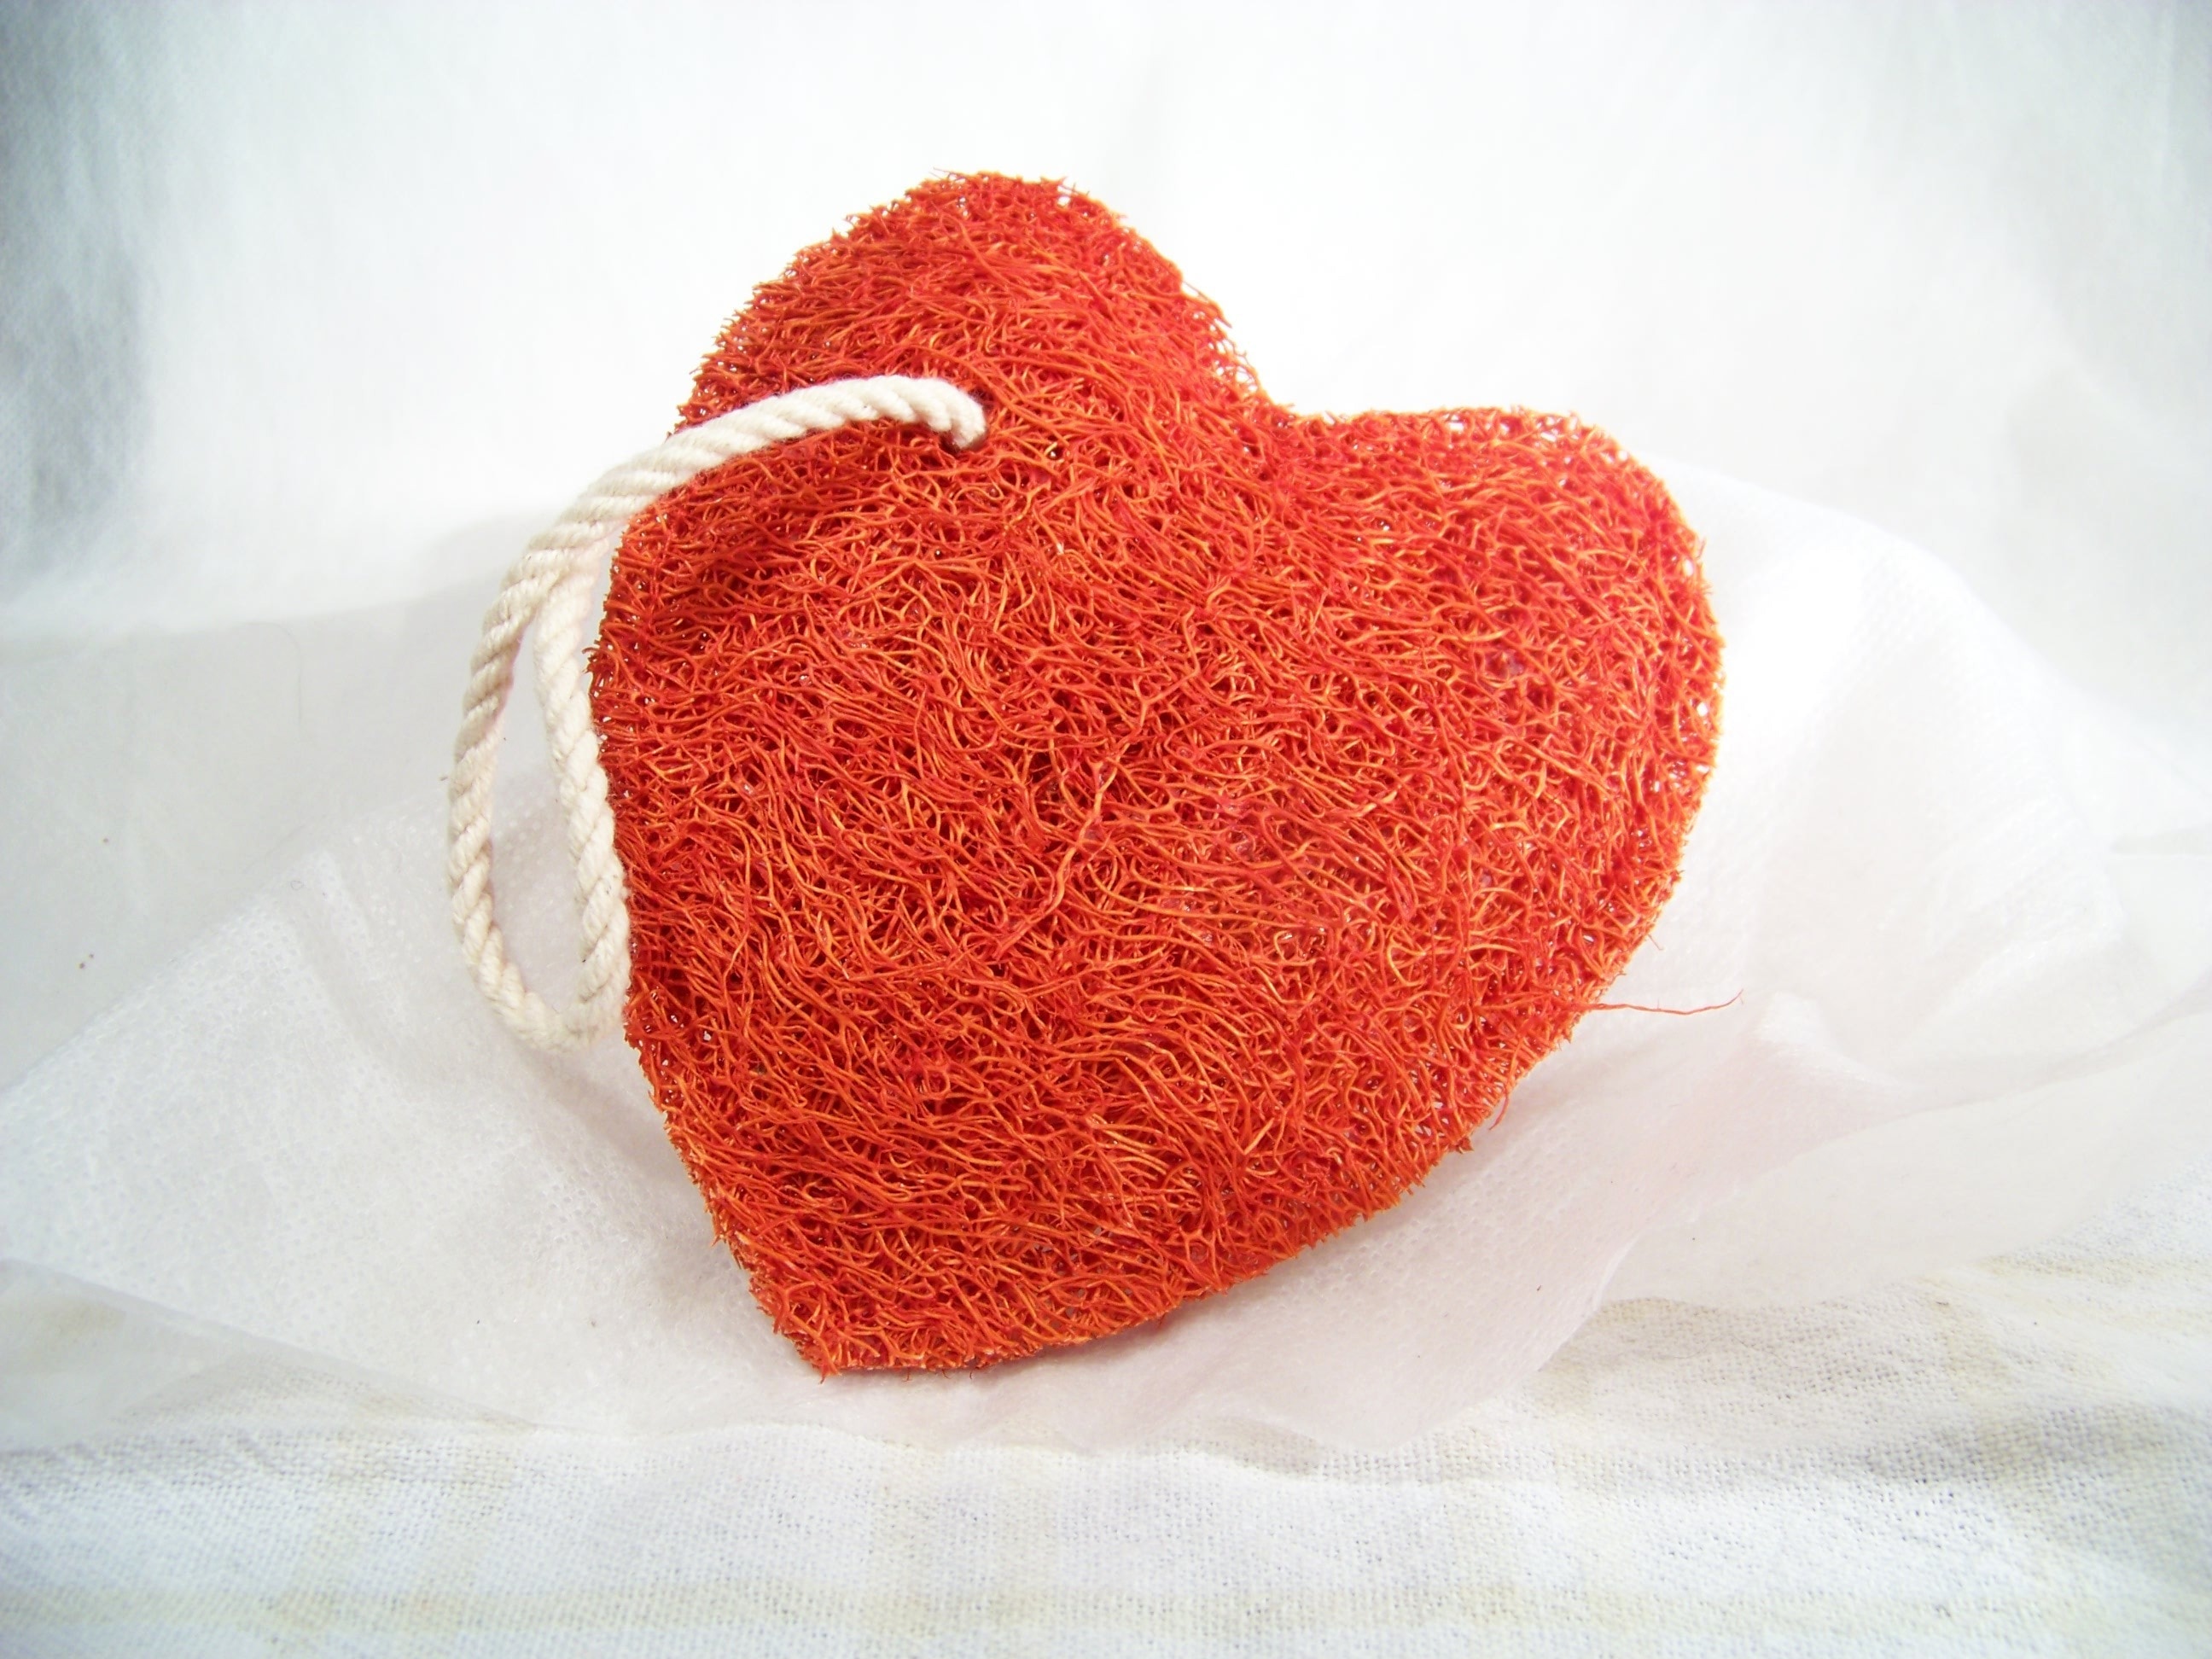 orange heart shape textile